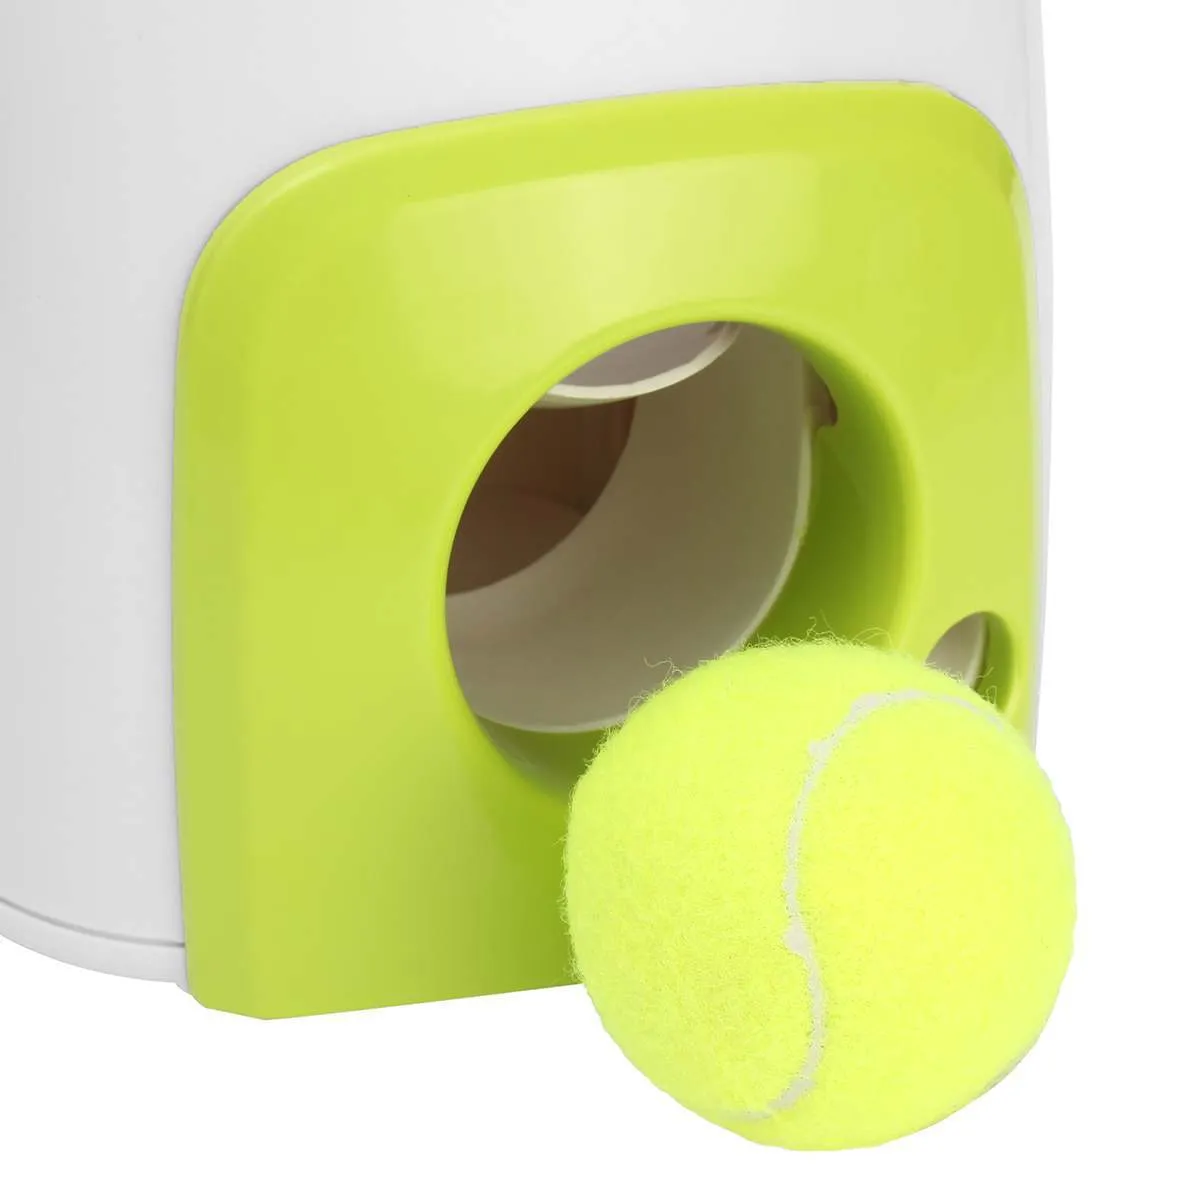 Hämta N Treat Dog Interactive Toys Cat Pet Tennis Ball Automatic Dispenser Play Training Toys Pet Funny Reward Launcher Trainer Y27896731